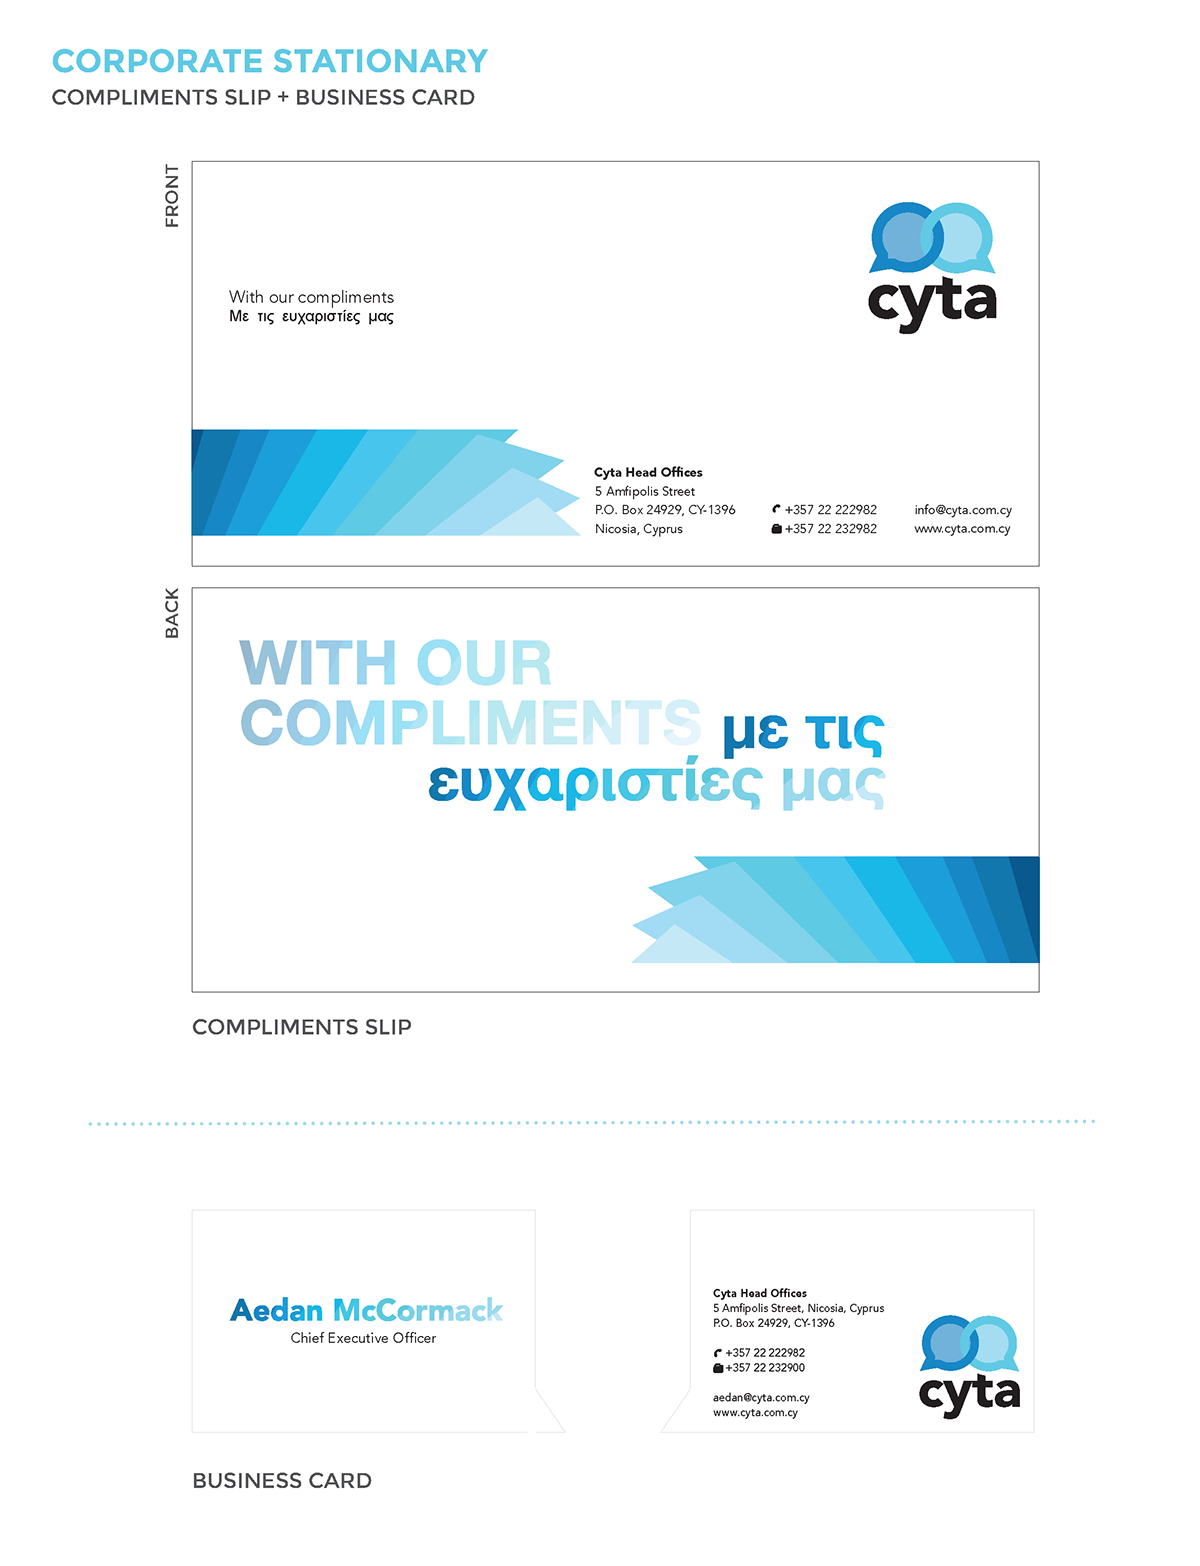 CYTA Telecommunication rebranding